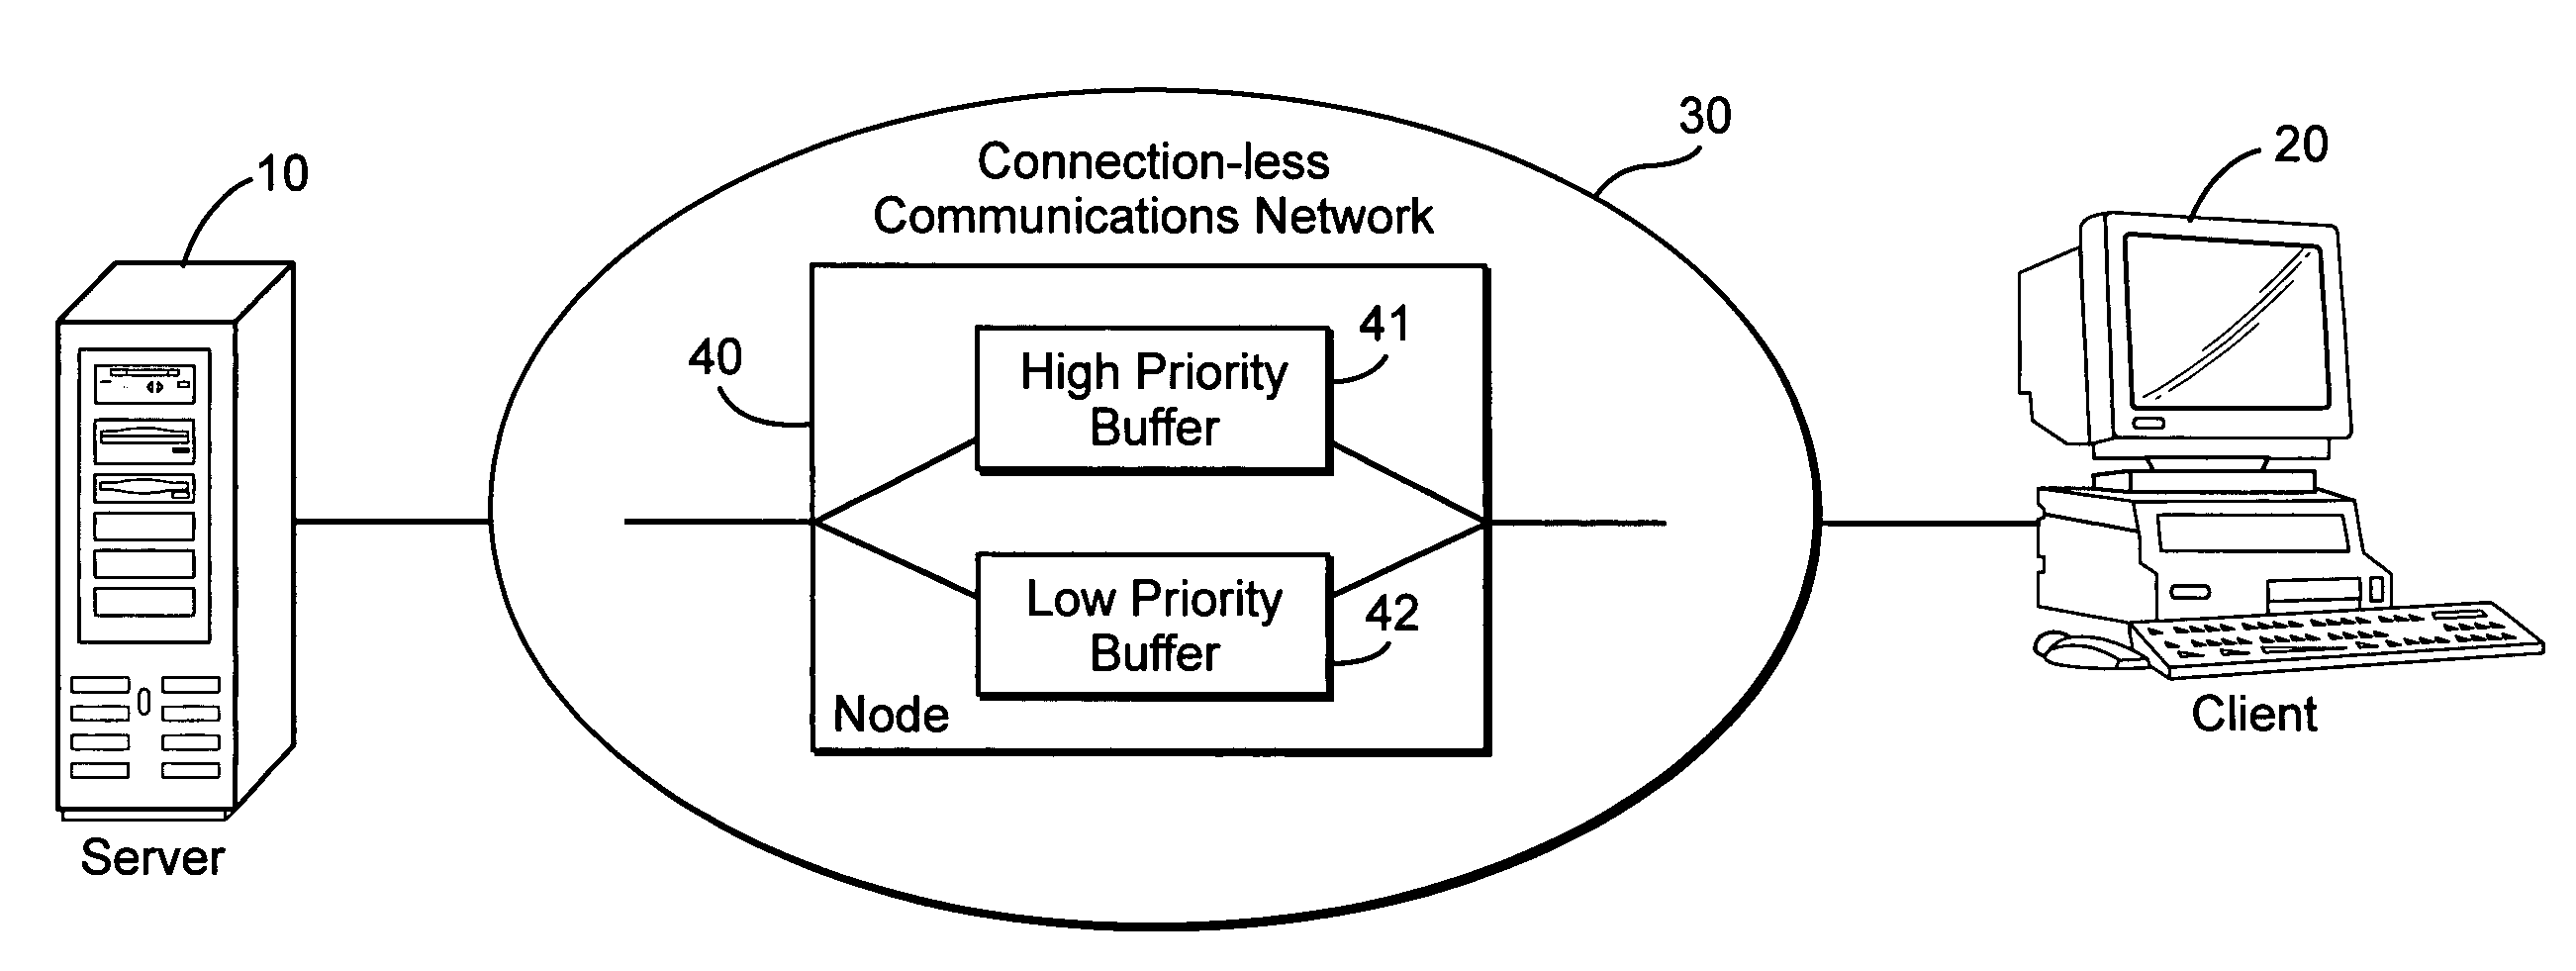 Computer communication providing quality of service